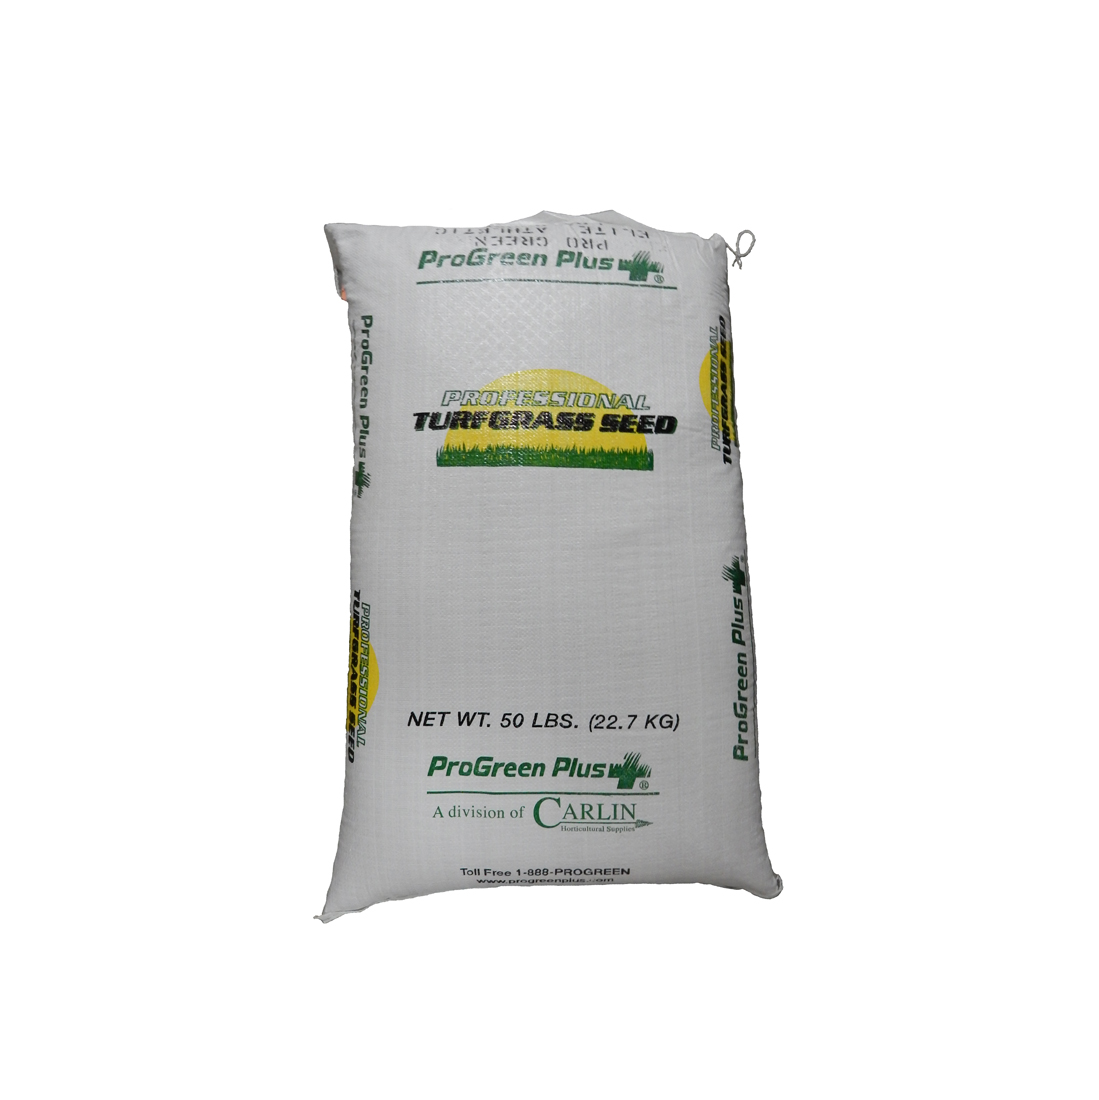 ProGreen Plus 600 Seed - 50 lb Bag